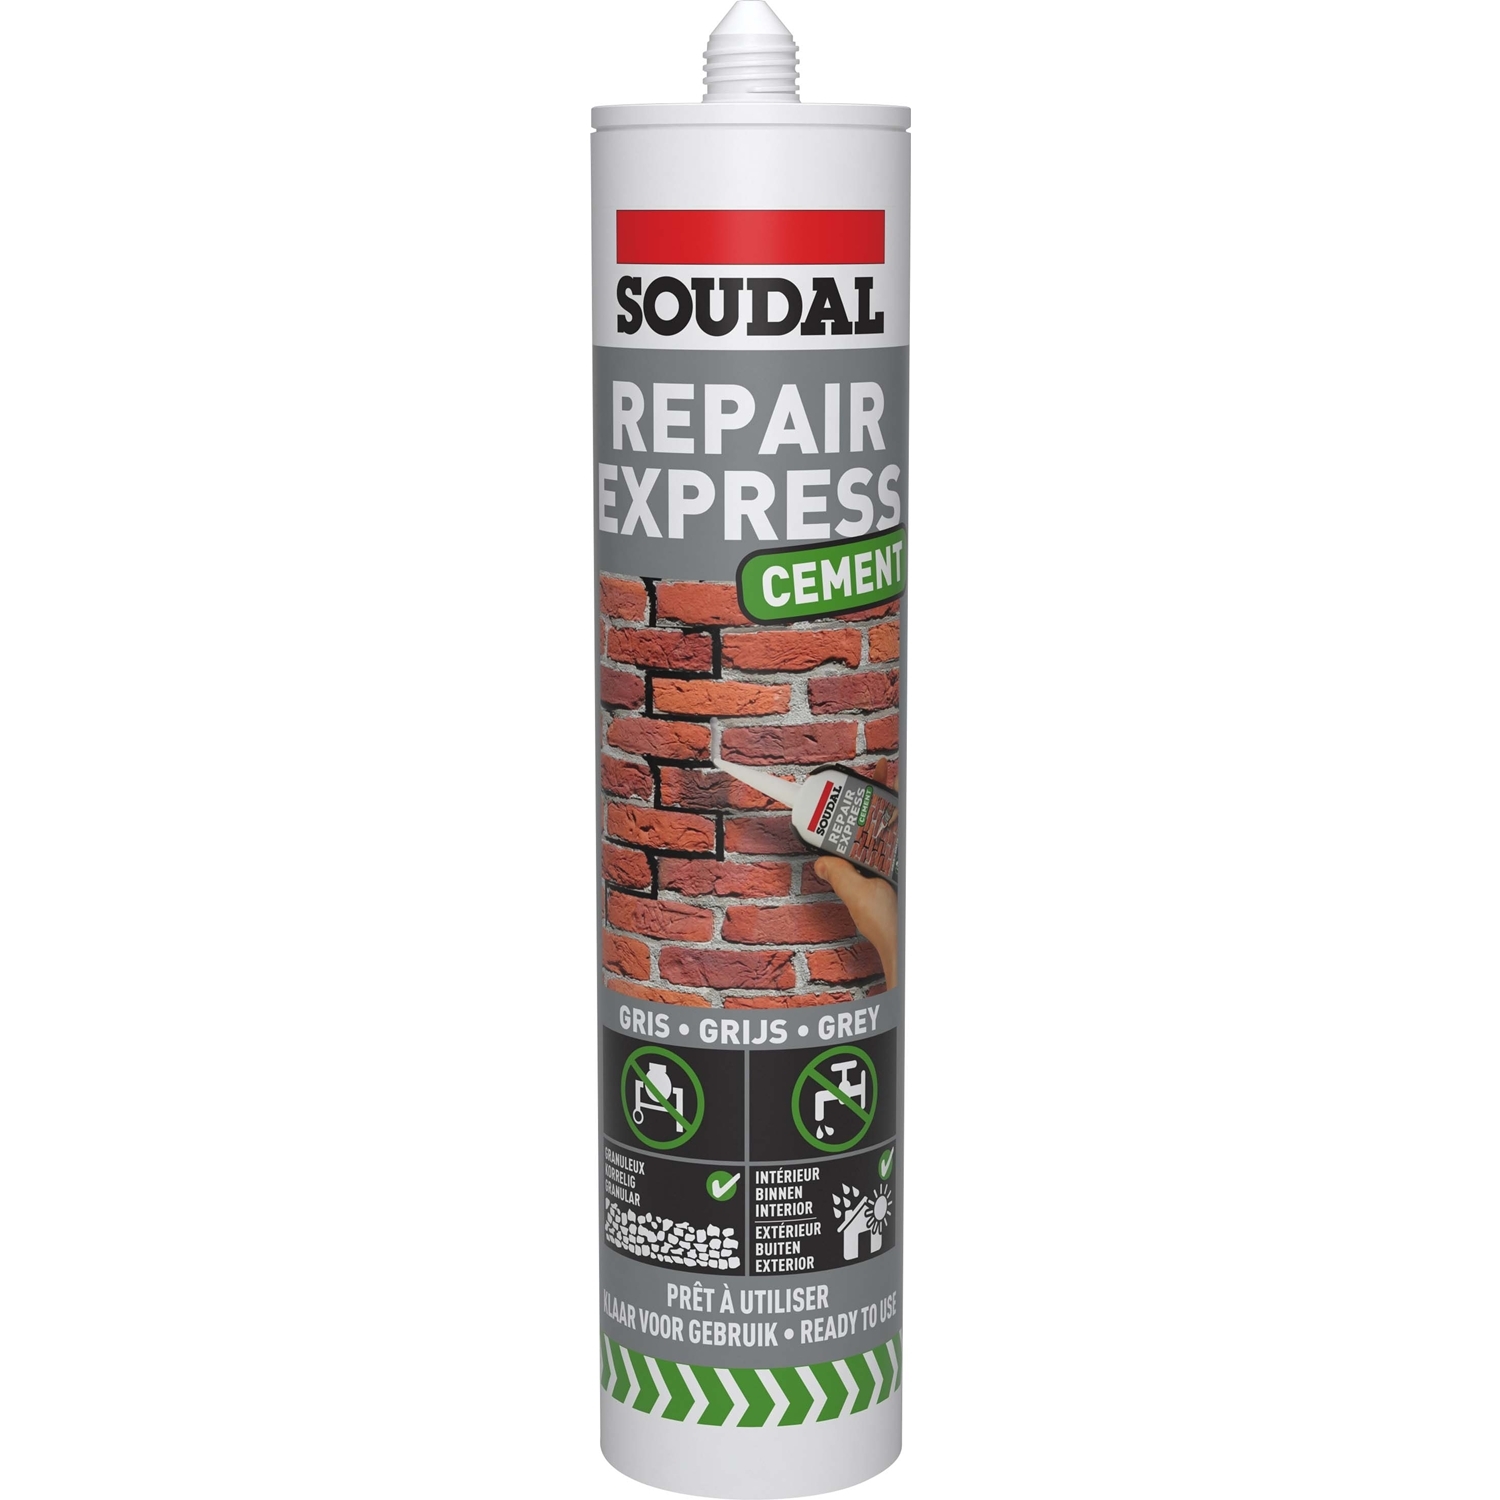 Soudal Repair Express Grey Cement 590g Image